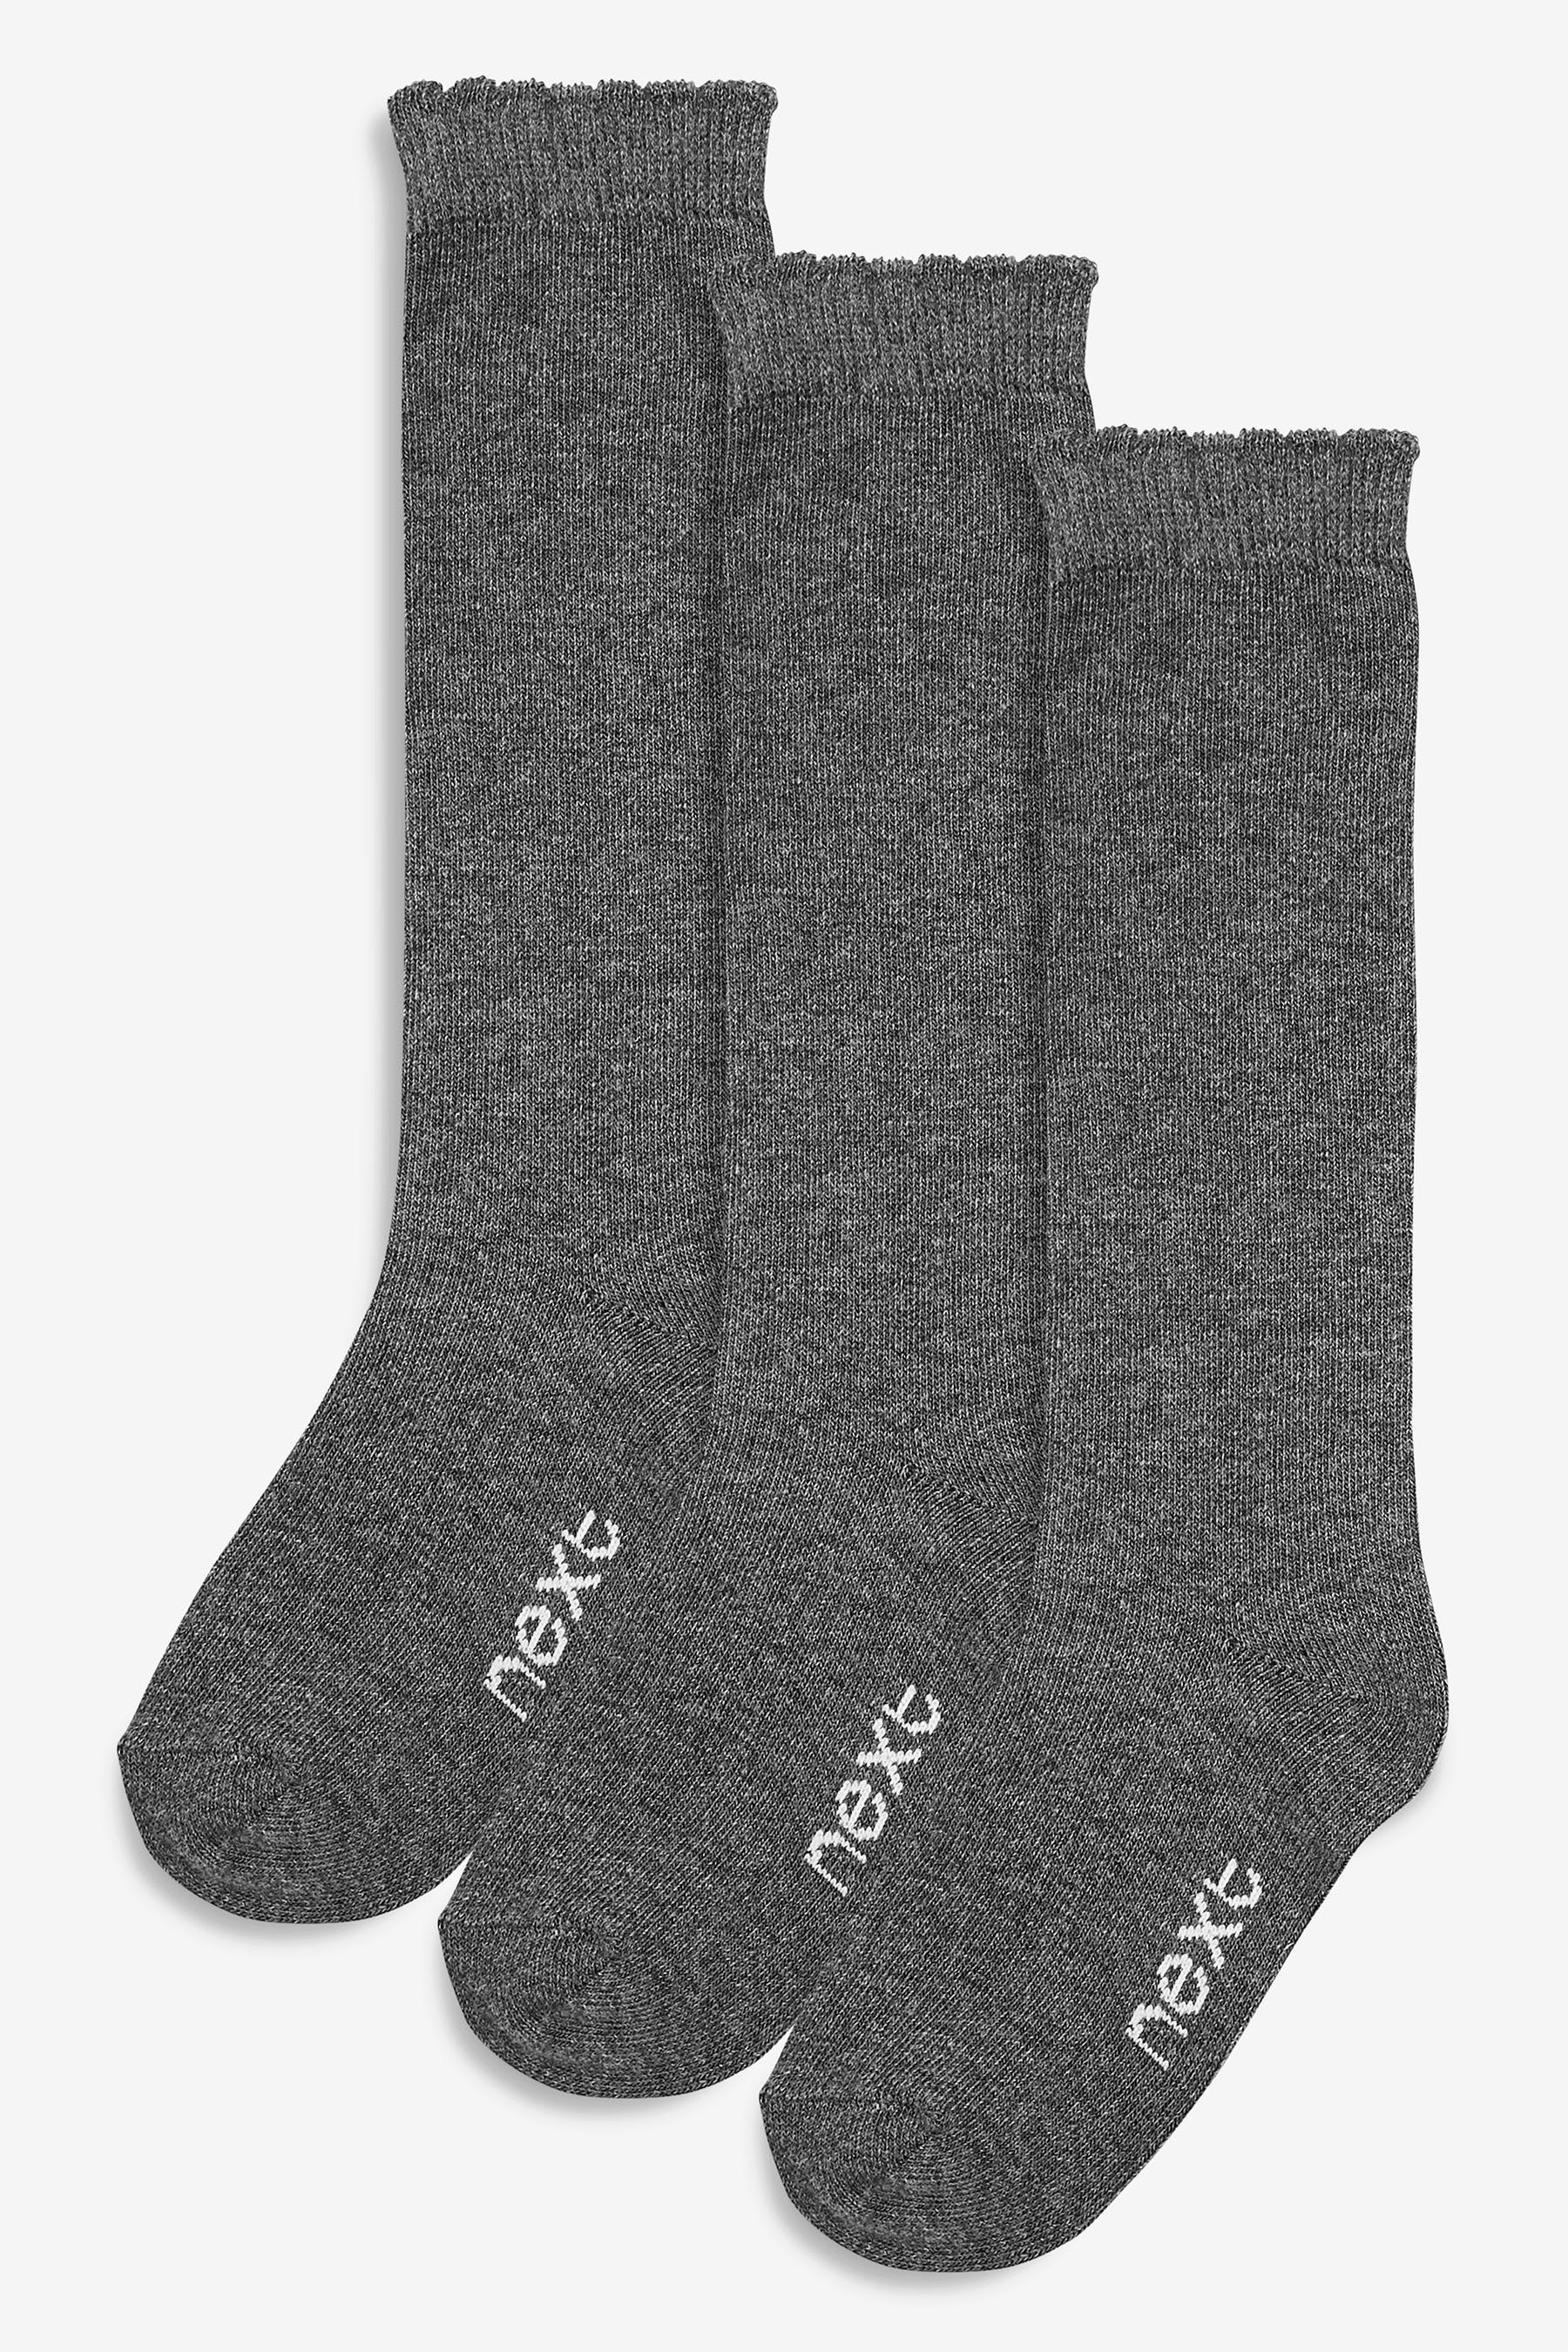 Next Socken Kniestrümpfe mit hohem Baumwollanteil, 3er-Pack (3-Paar)